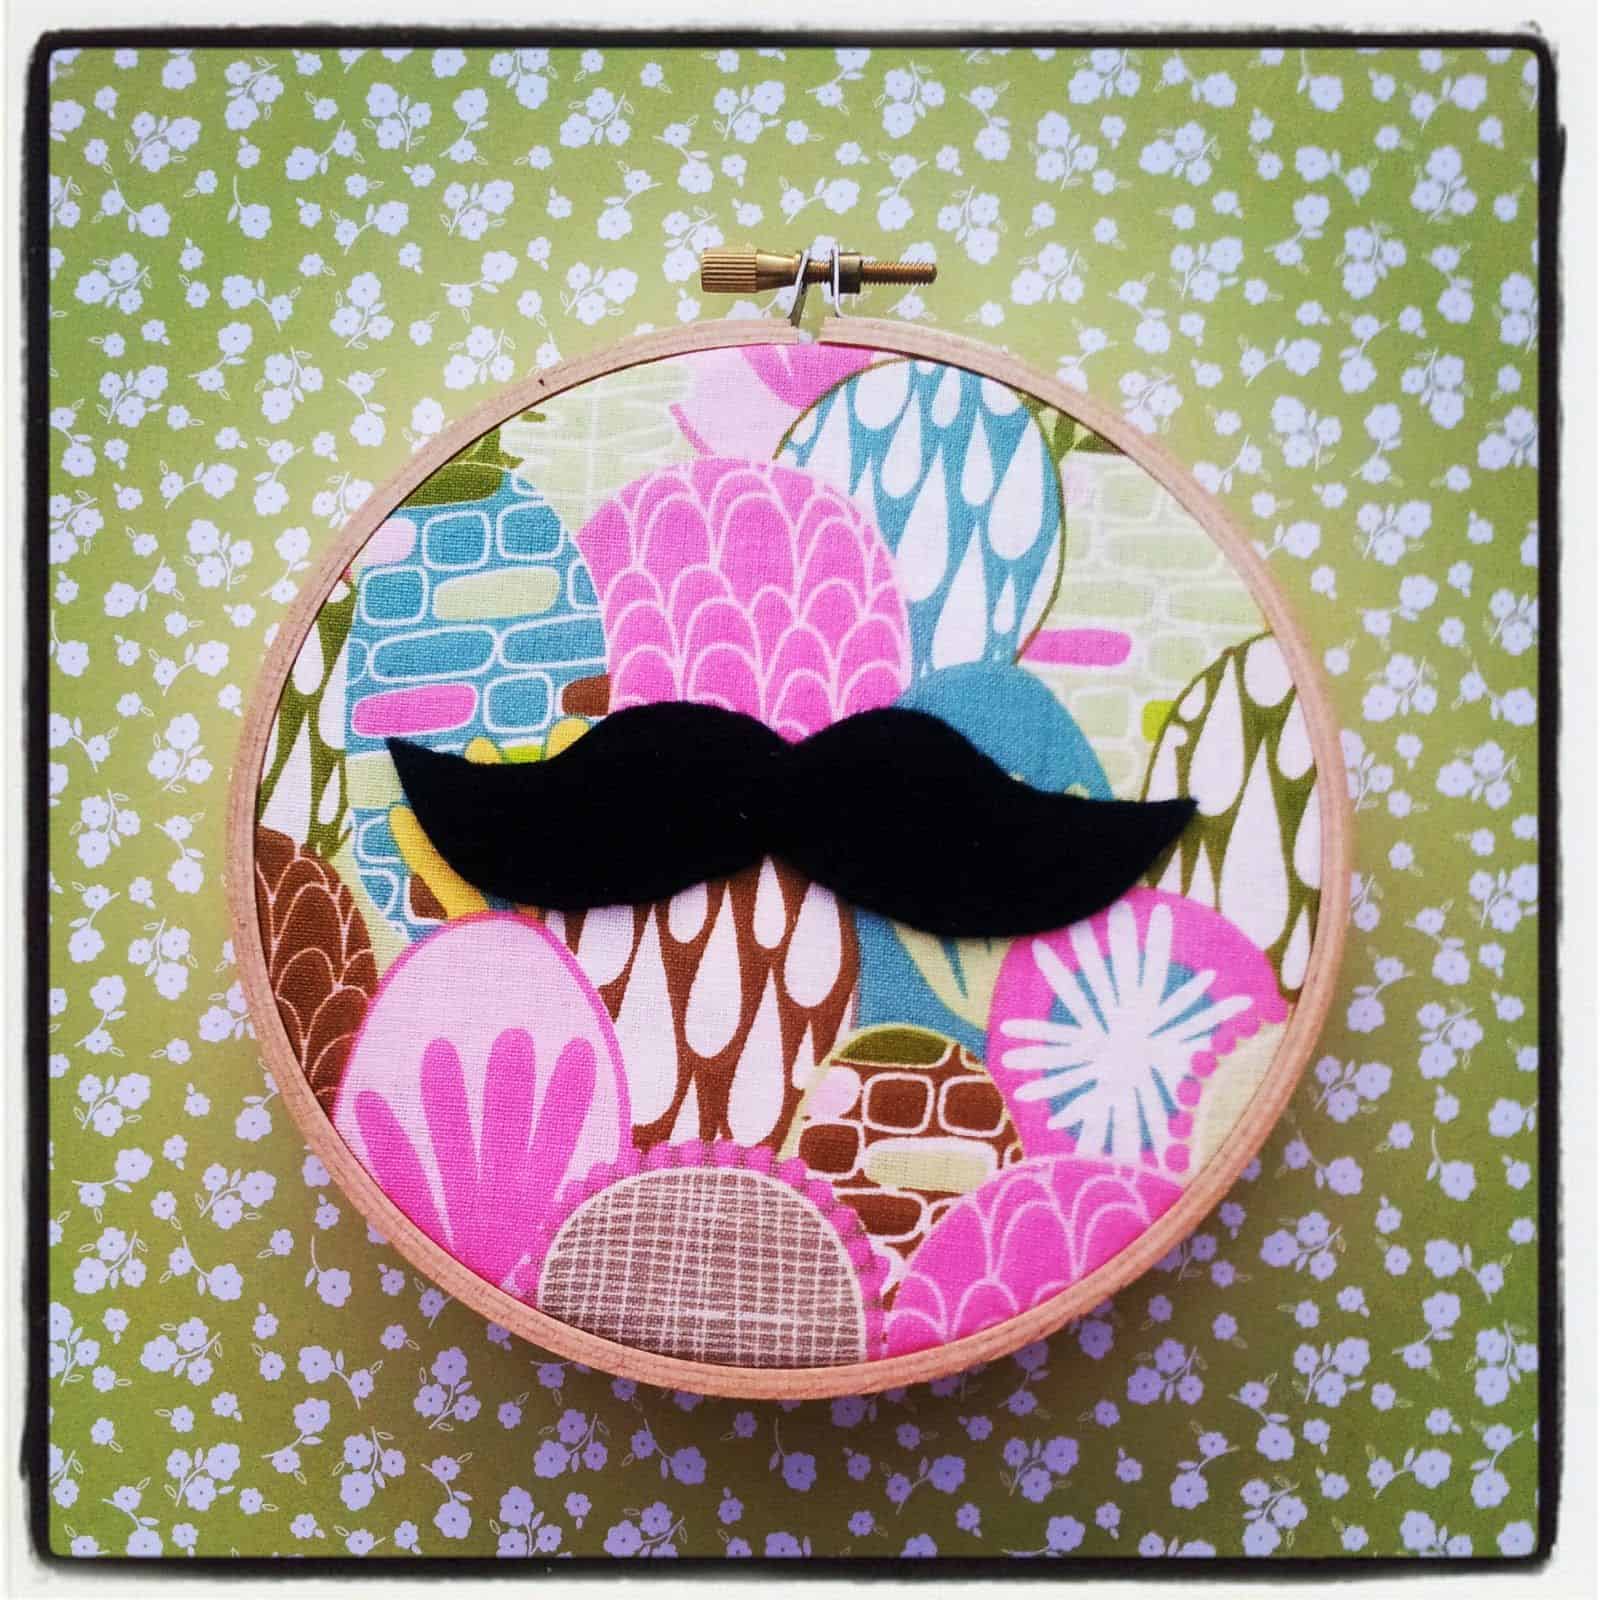 Diy moustahce embroidery hoop art